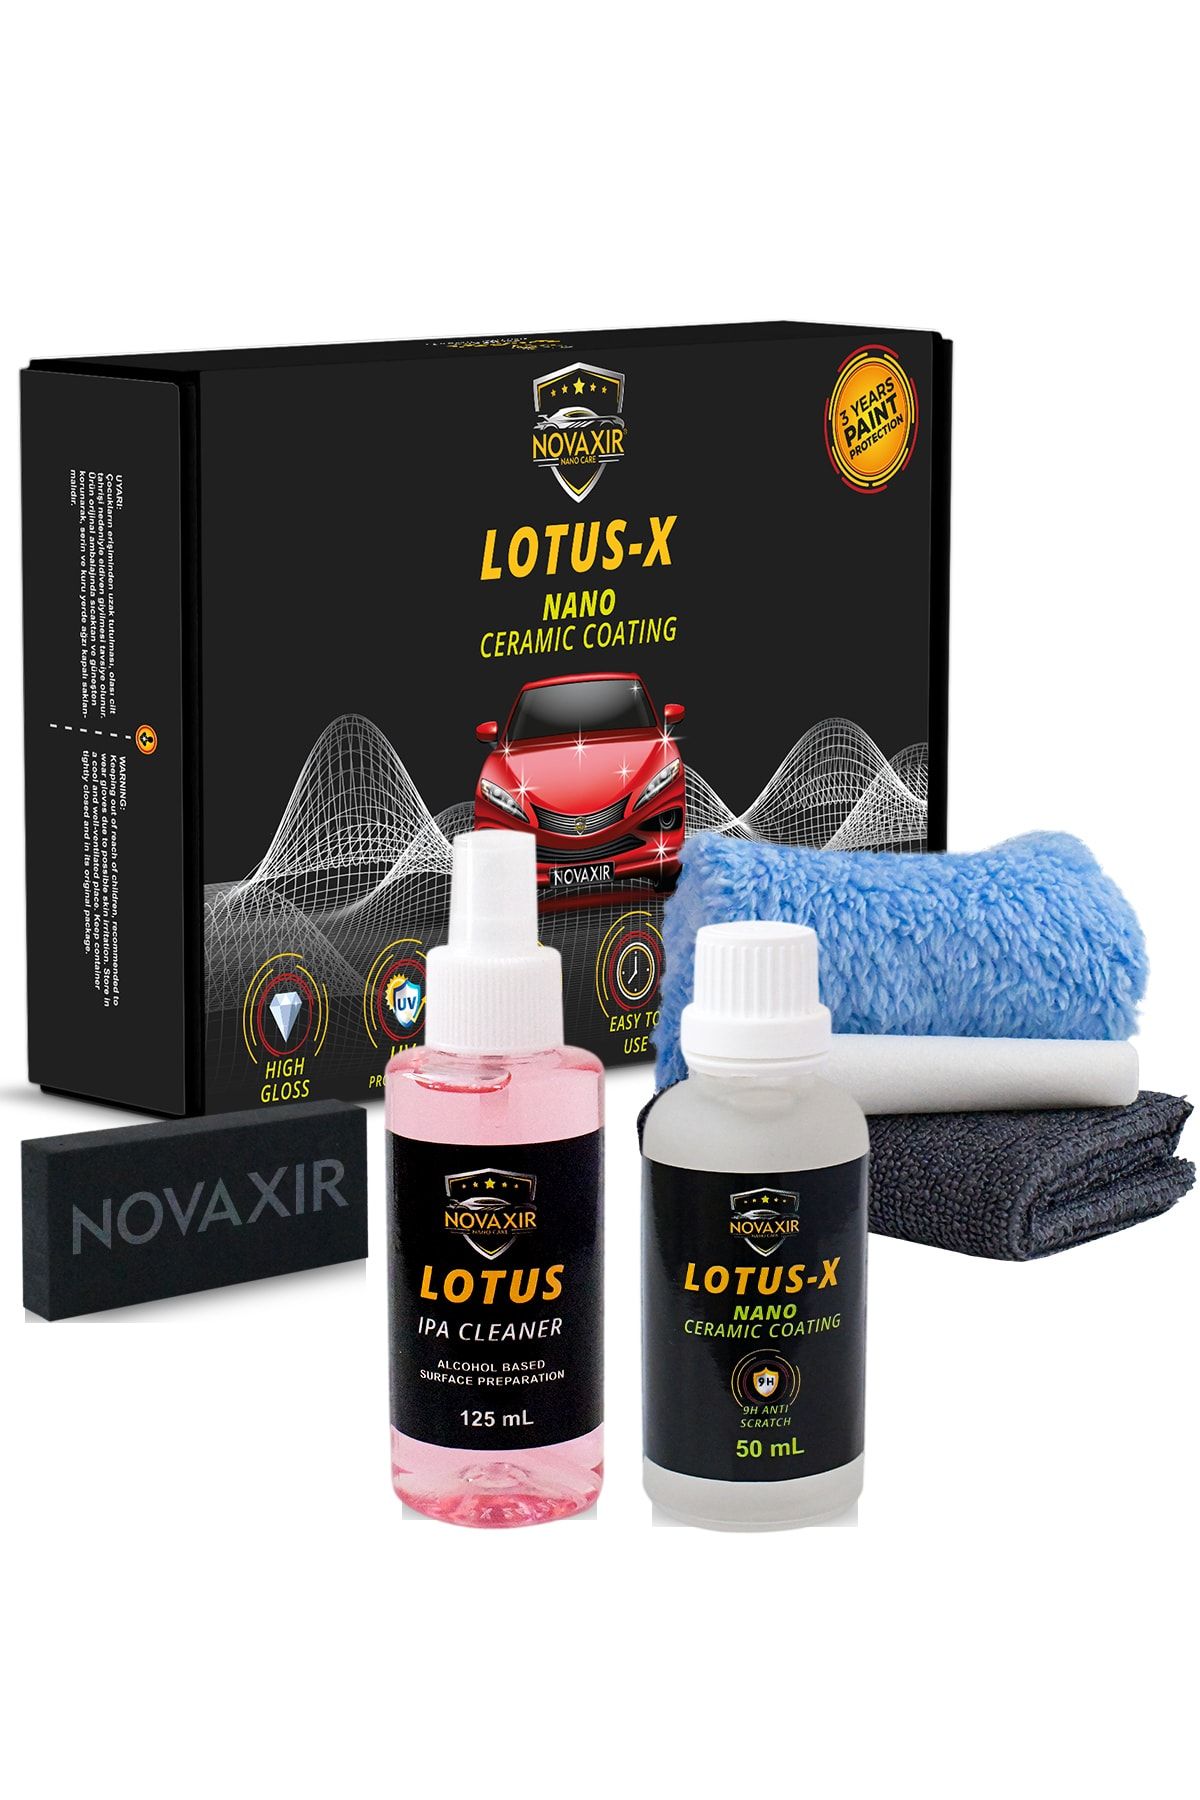 novaxir Lotus-x 9h Nano Seramik Kaplama Seti 50 ml Ipa Cleaner Yüksek Boya Koruma- Parlaklık